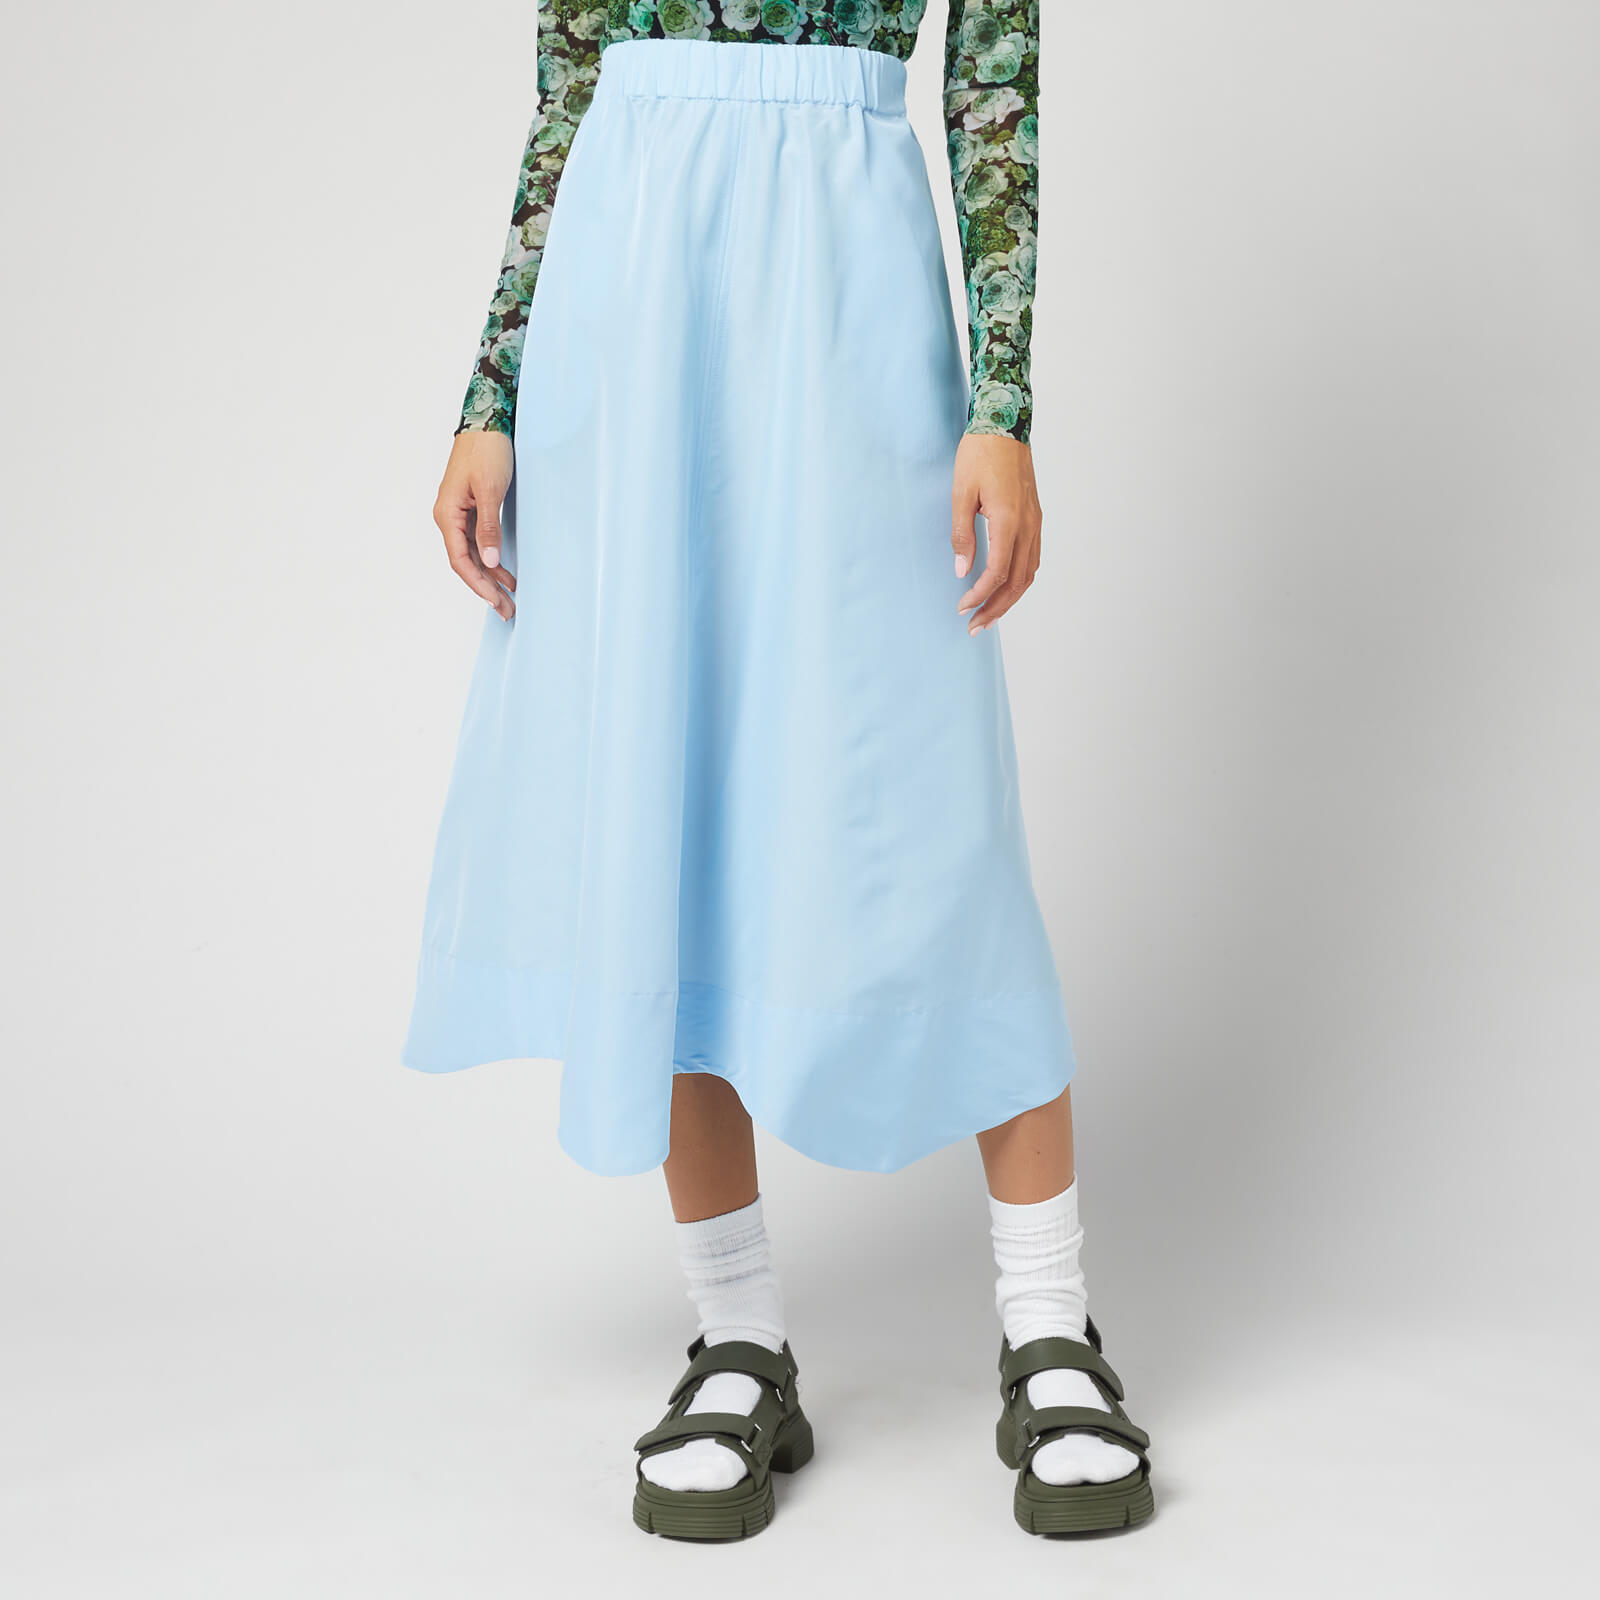 Ganni Women's Taffeta Skirt - Airy Blue - EU 34/UK 6